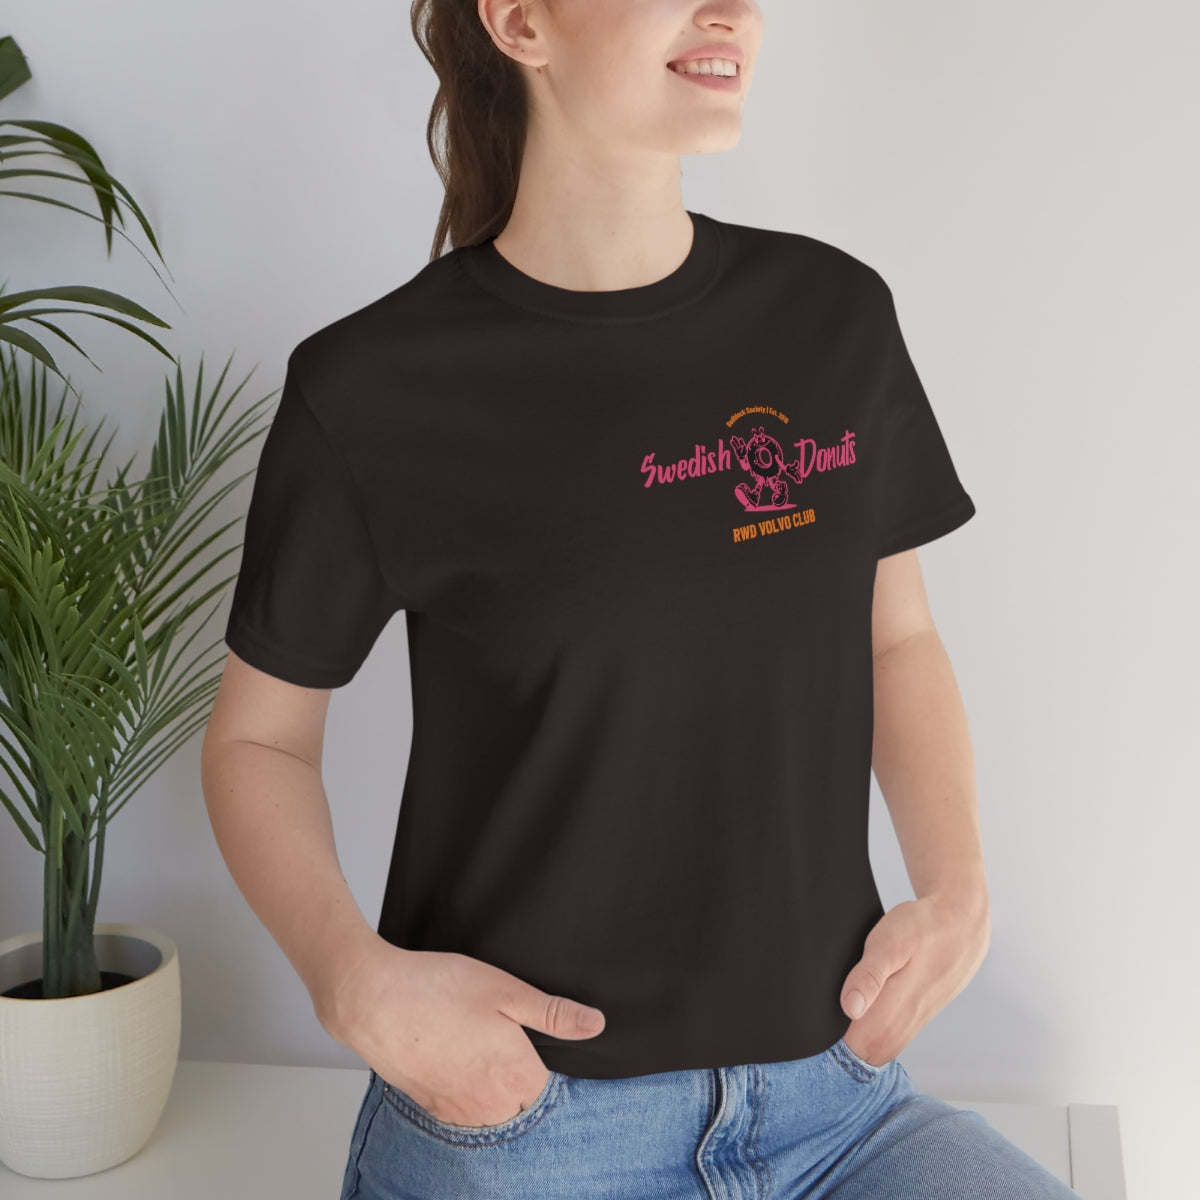 Swedish Donuts Shirt